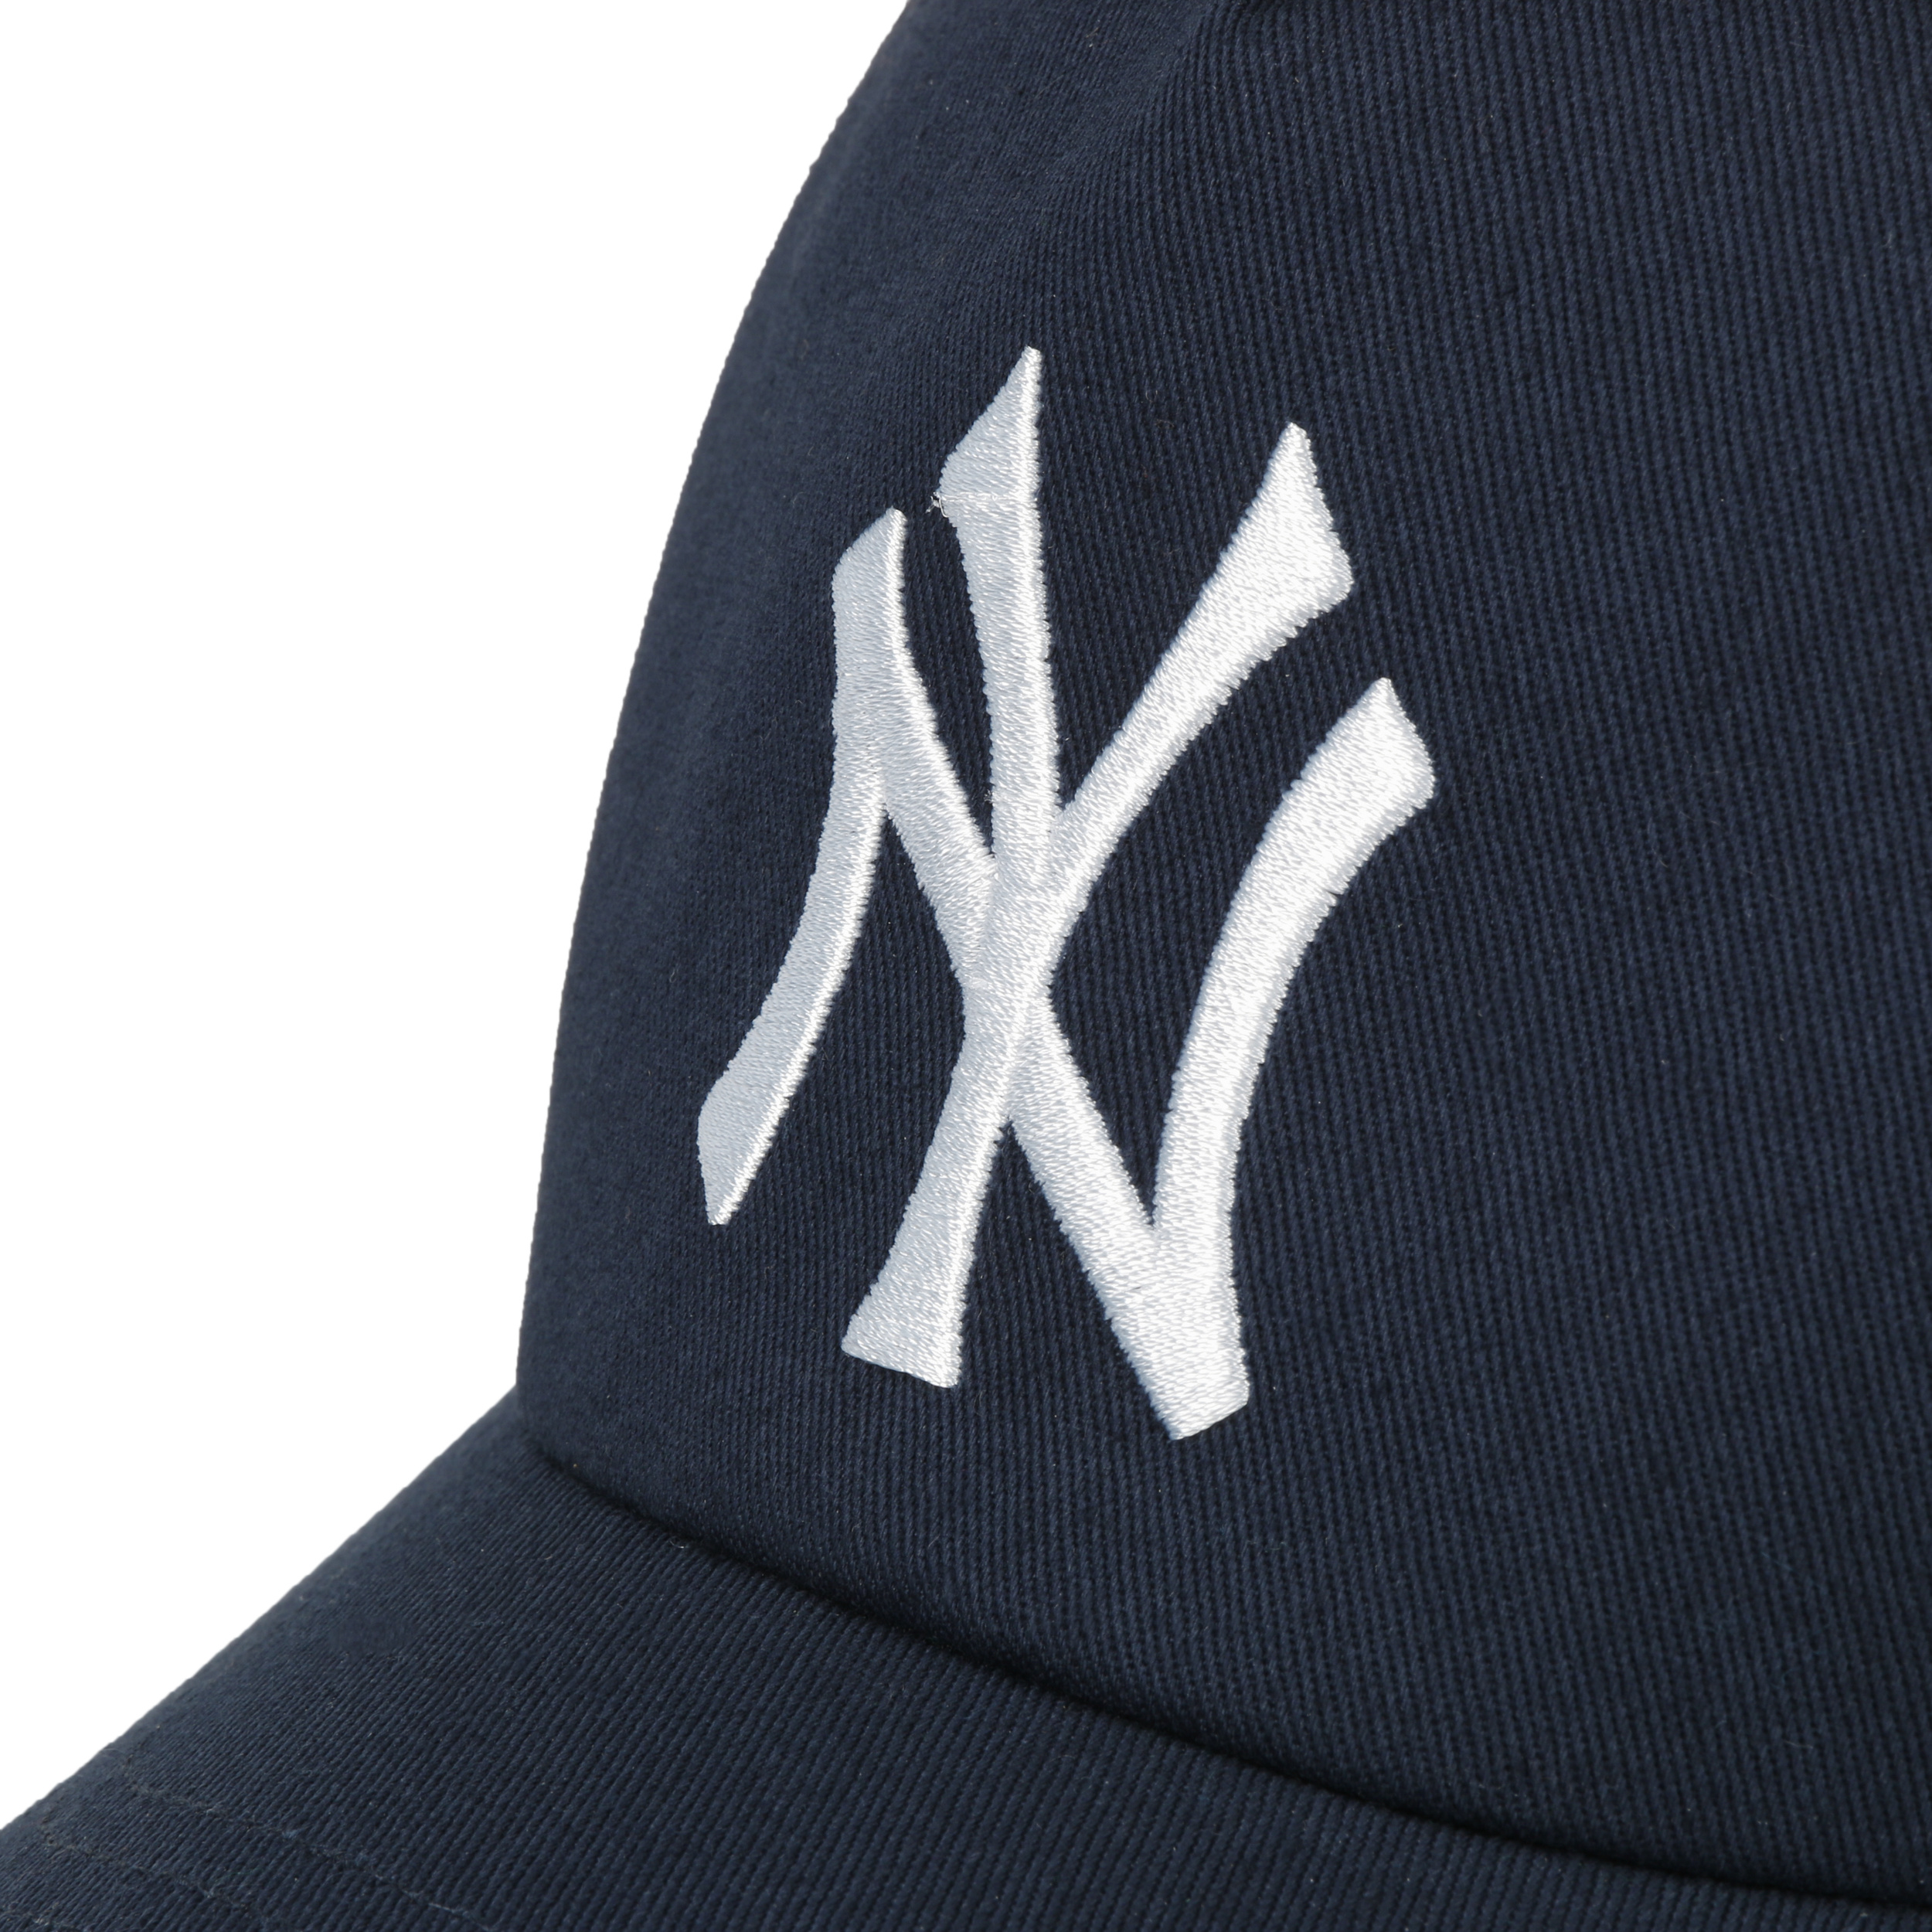 New York Yankees MLB Nantasket Captain Snapback Cap in Black